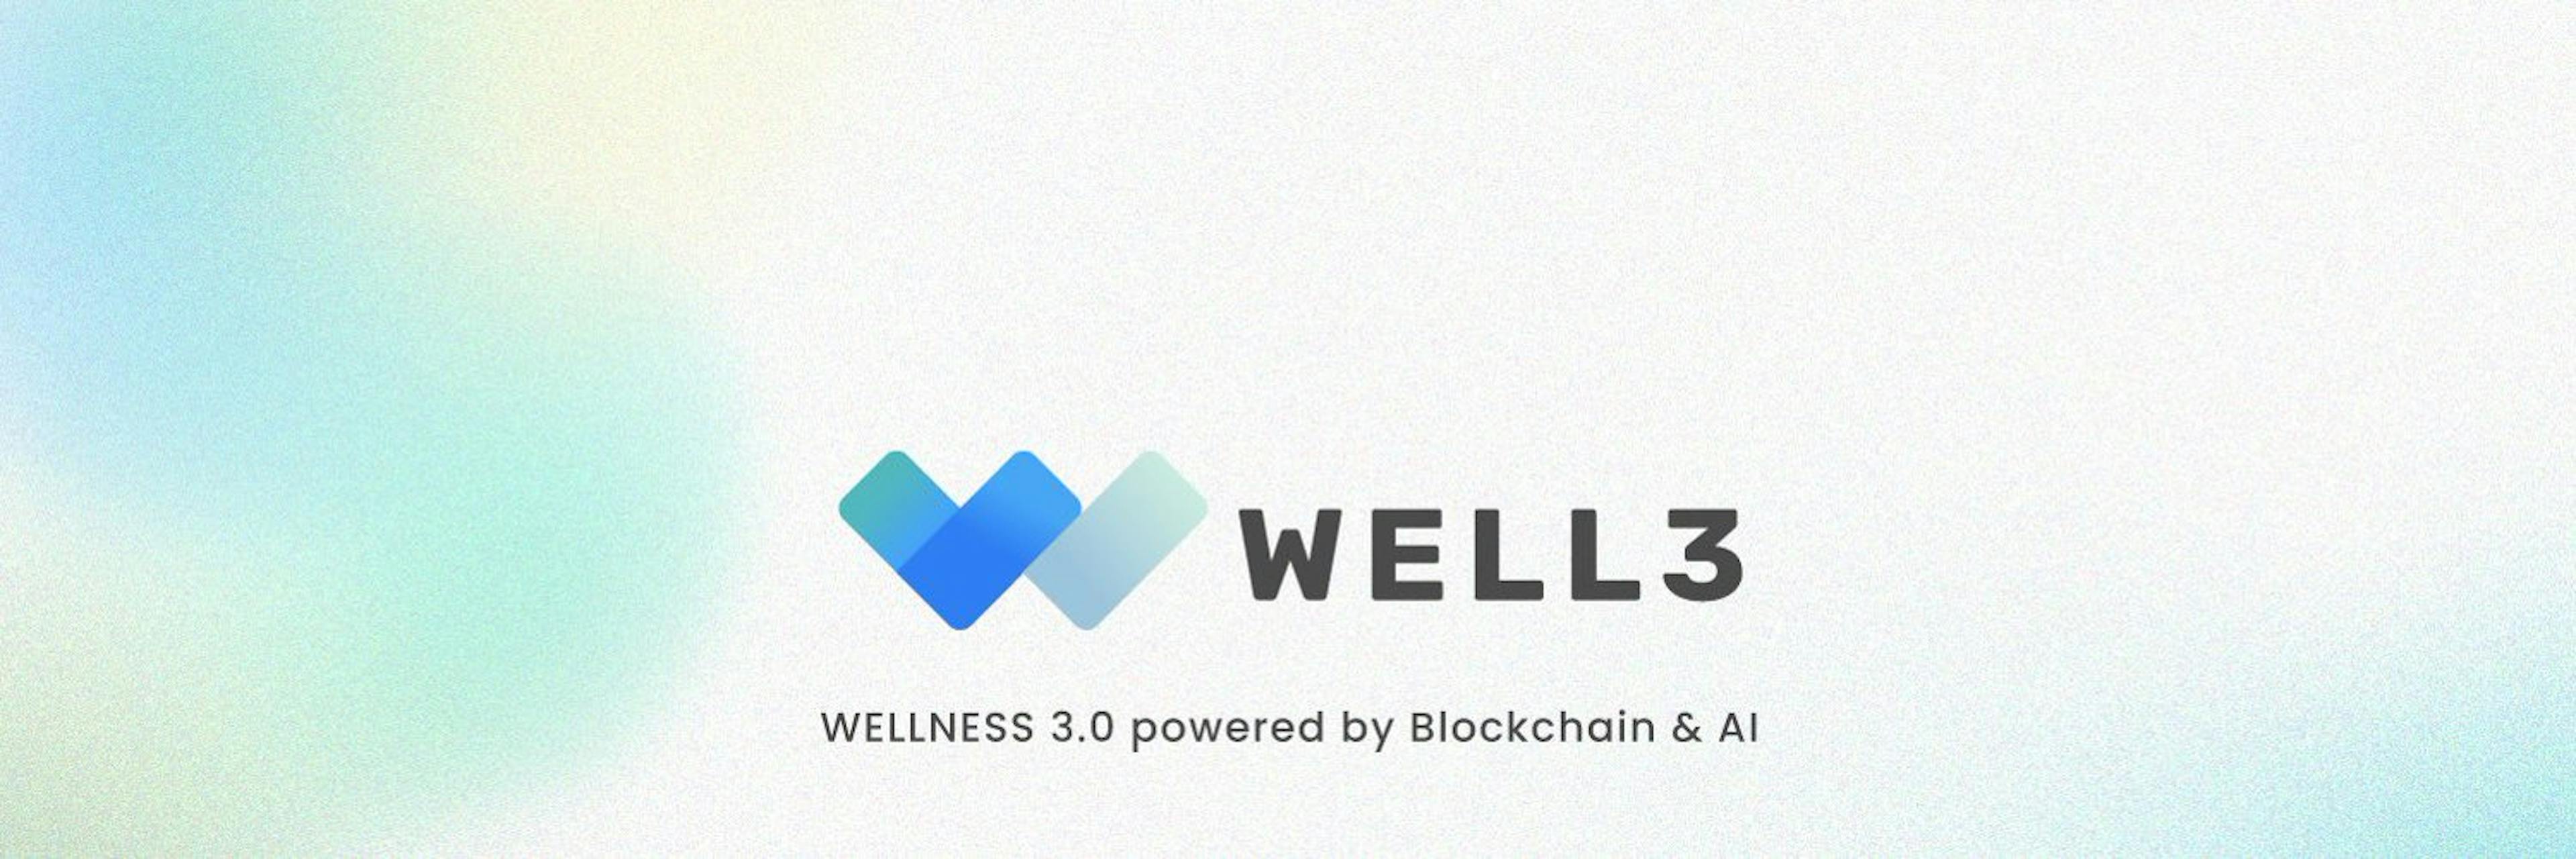 featured image - Conheça Well3, a estrutura Multichain que transforma o gerenciamento de dados de saúde